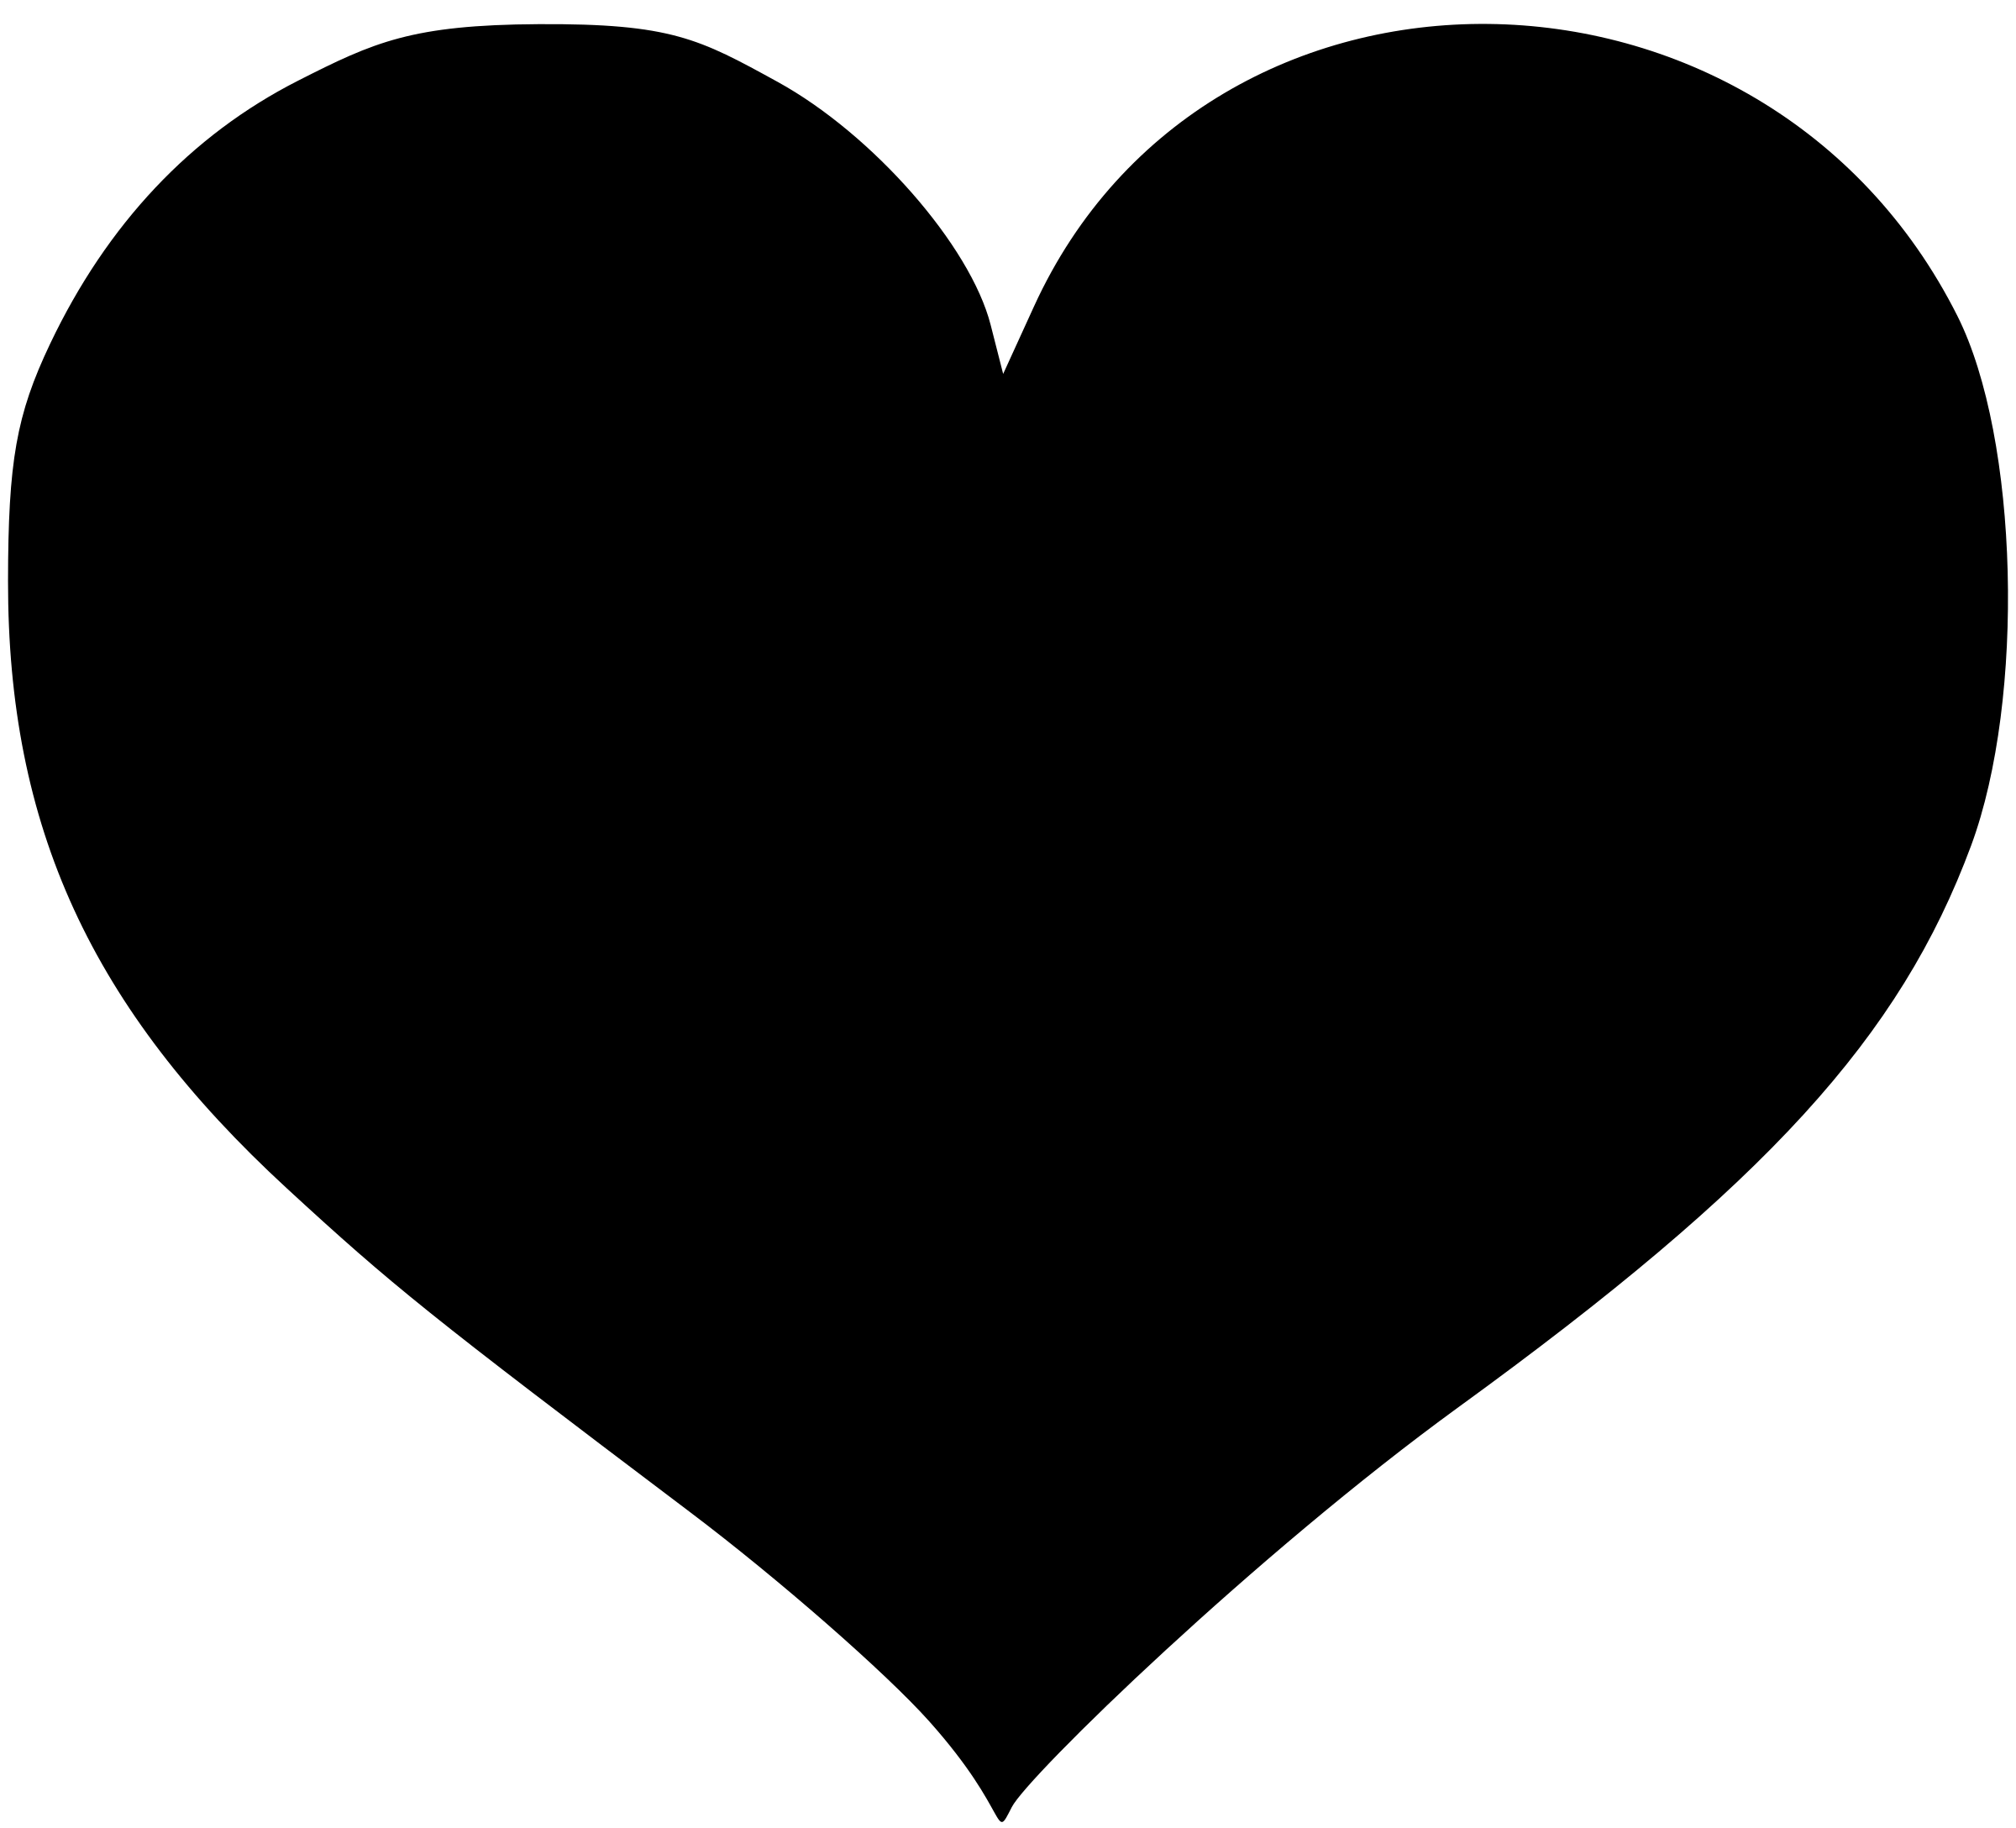 Heart Logo - Heart Logo PNG Transparent & SVG Vector - Freebie Supply